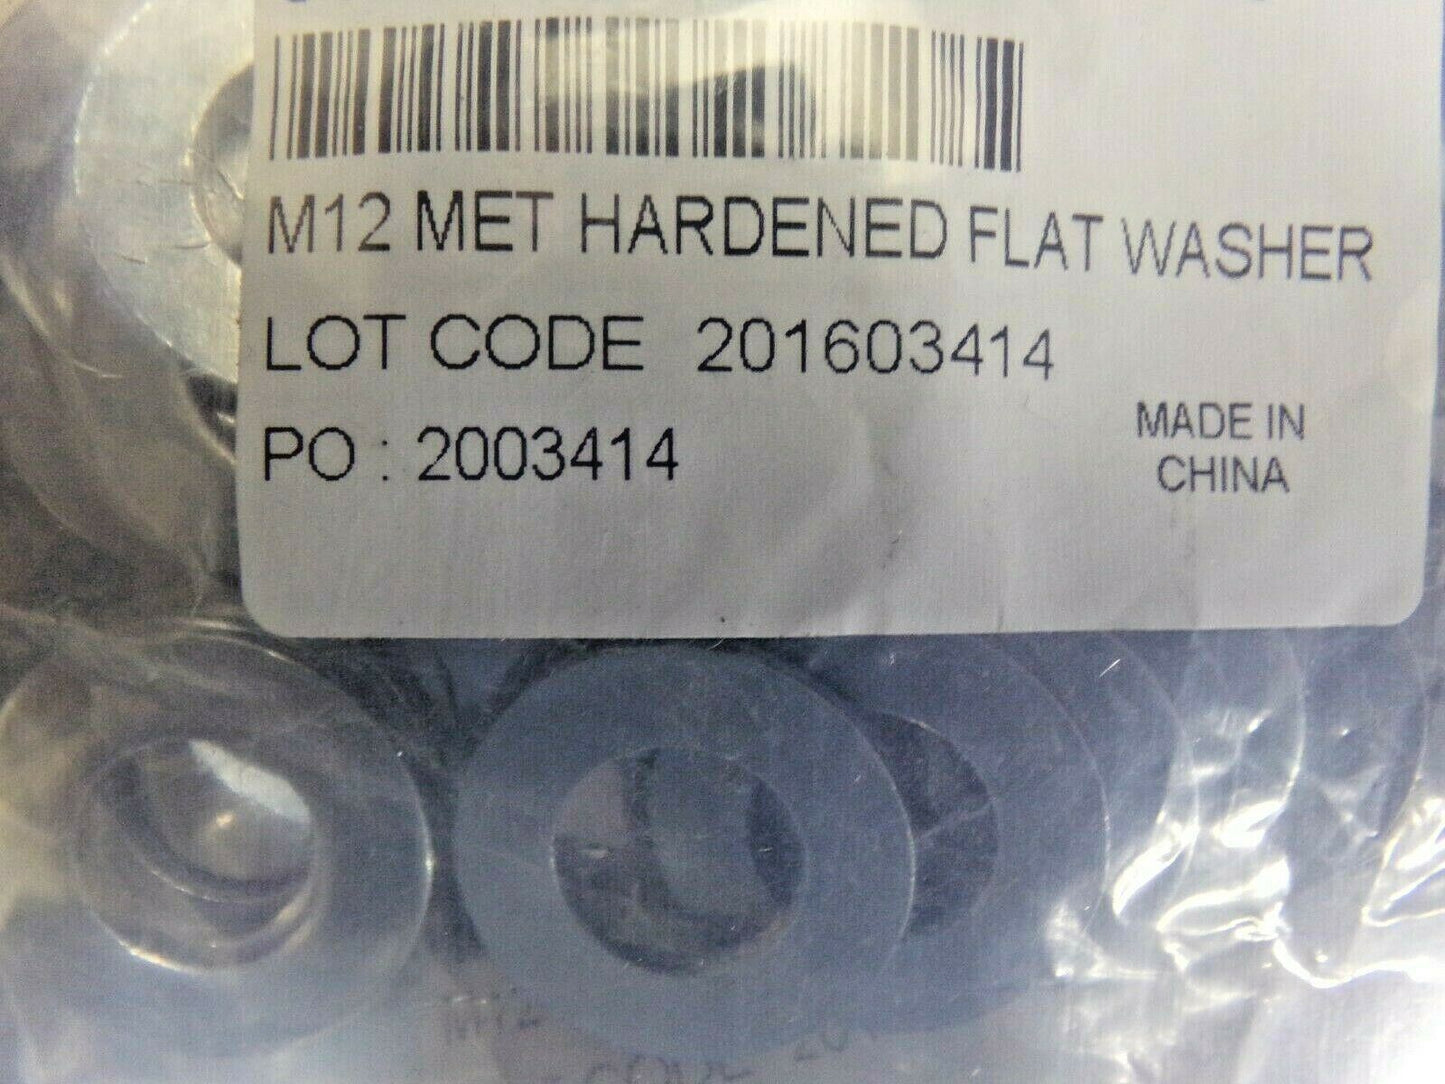 100 M12 MET HARDENED FLAT WASHER (183811448837-NBT13)